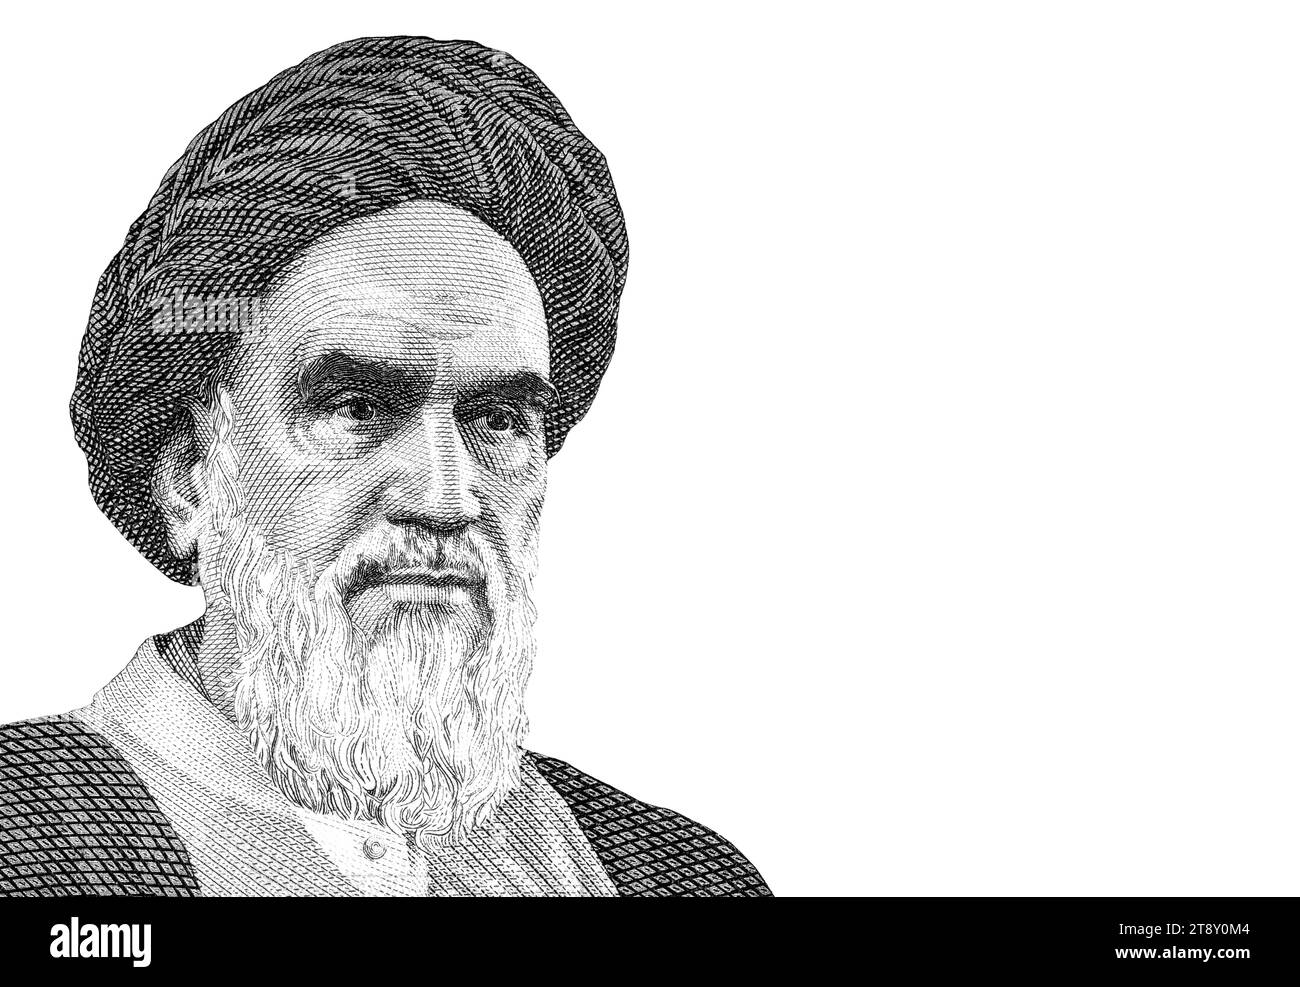 Ayatollah Ruhollah Khomeini (1900-1989). Portrait from Iran Banknotes Stock Photo